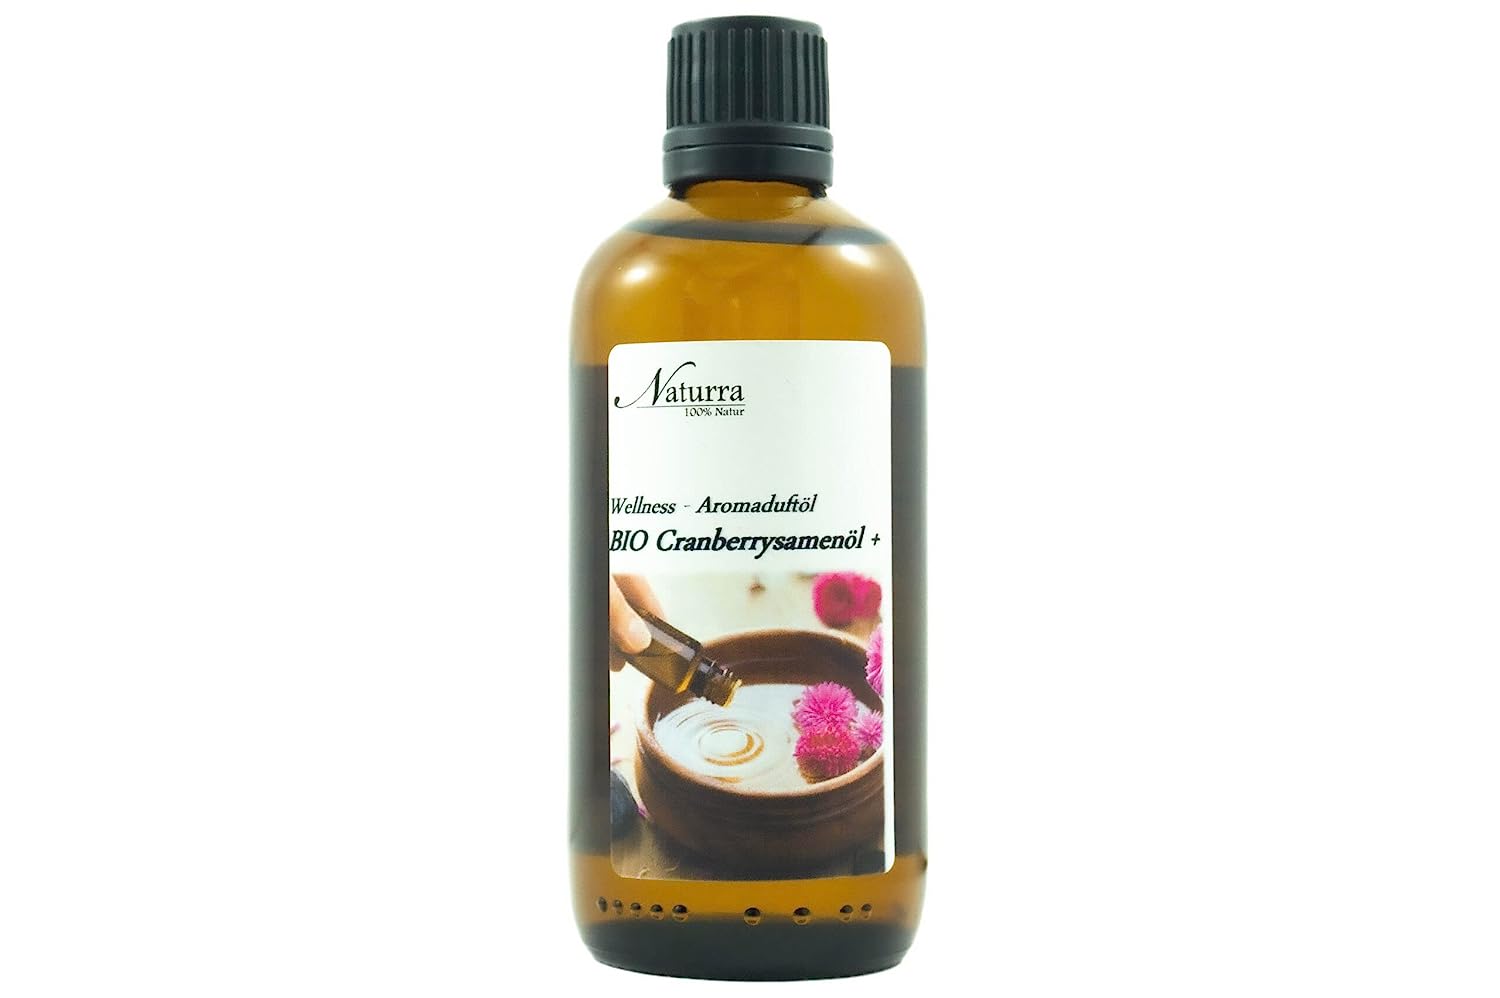 Naturra melaleuca Alternifolia Organic Cranberry Seed Oil 100 Ml Cold Pressed Native With Organic Tea Tea Tea Essential Oil Wellness Oil Body Oil Aromatherapy Natural Cosmetics of Your Choice